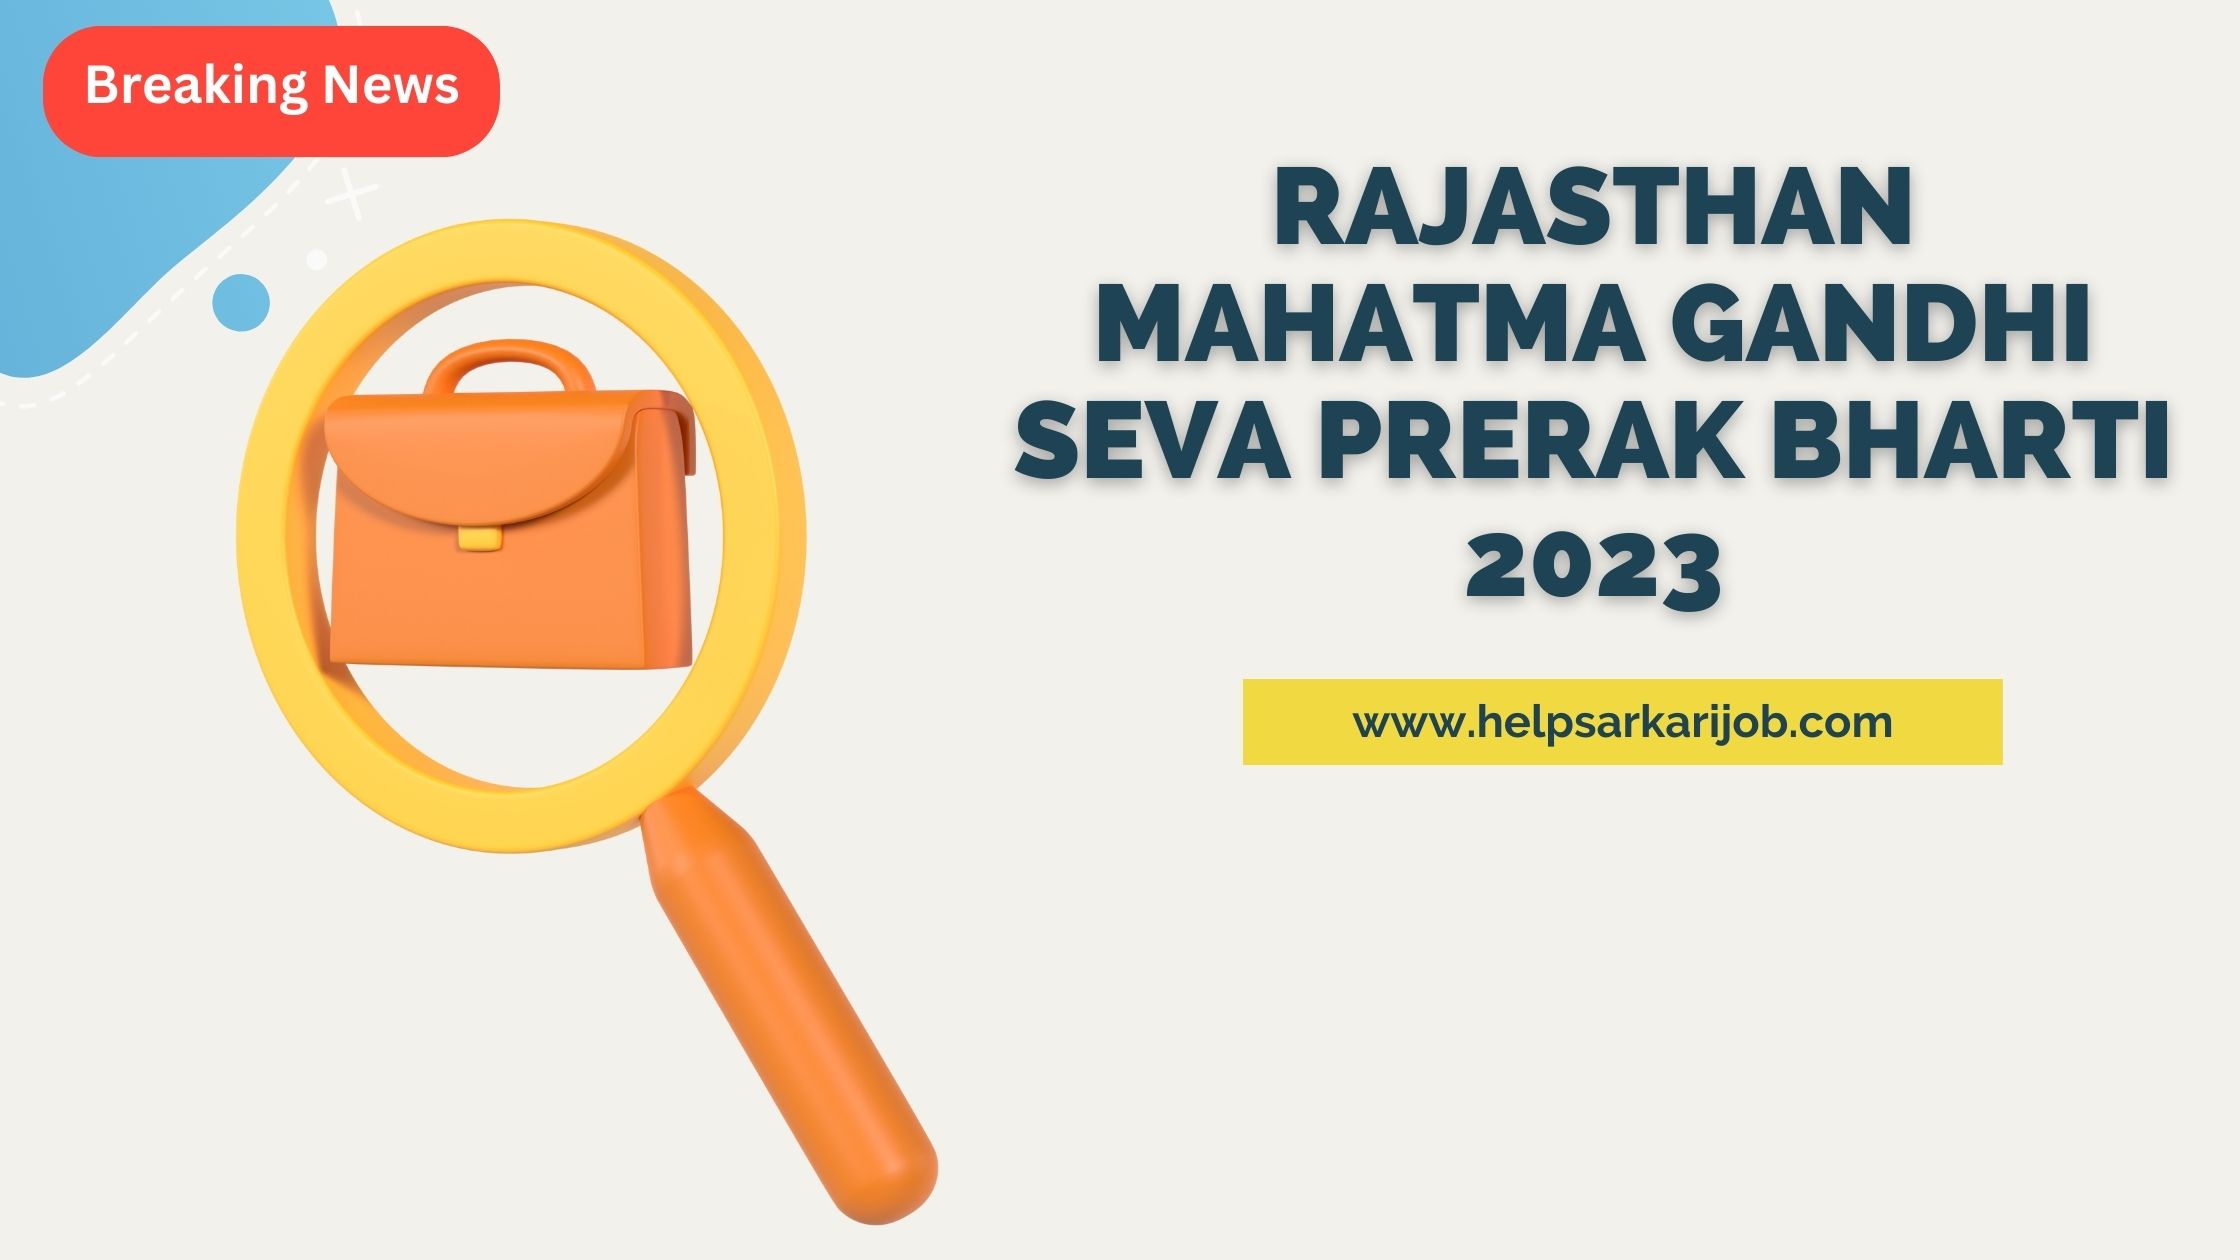 Rajasthan Mahatma Gandhi Seva Prerak Bharti 2023